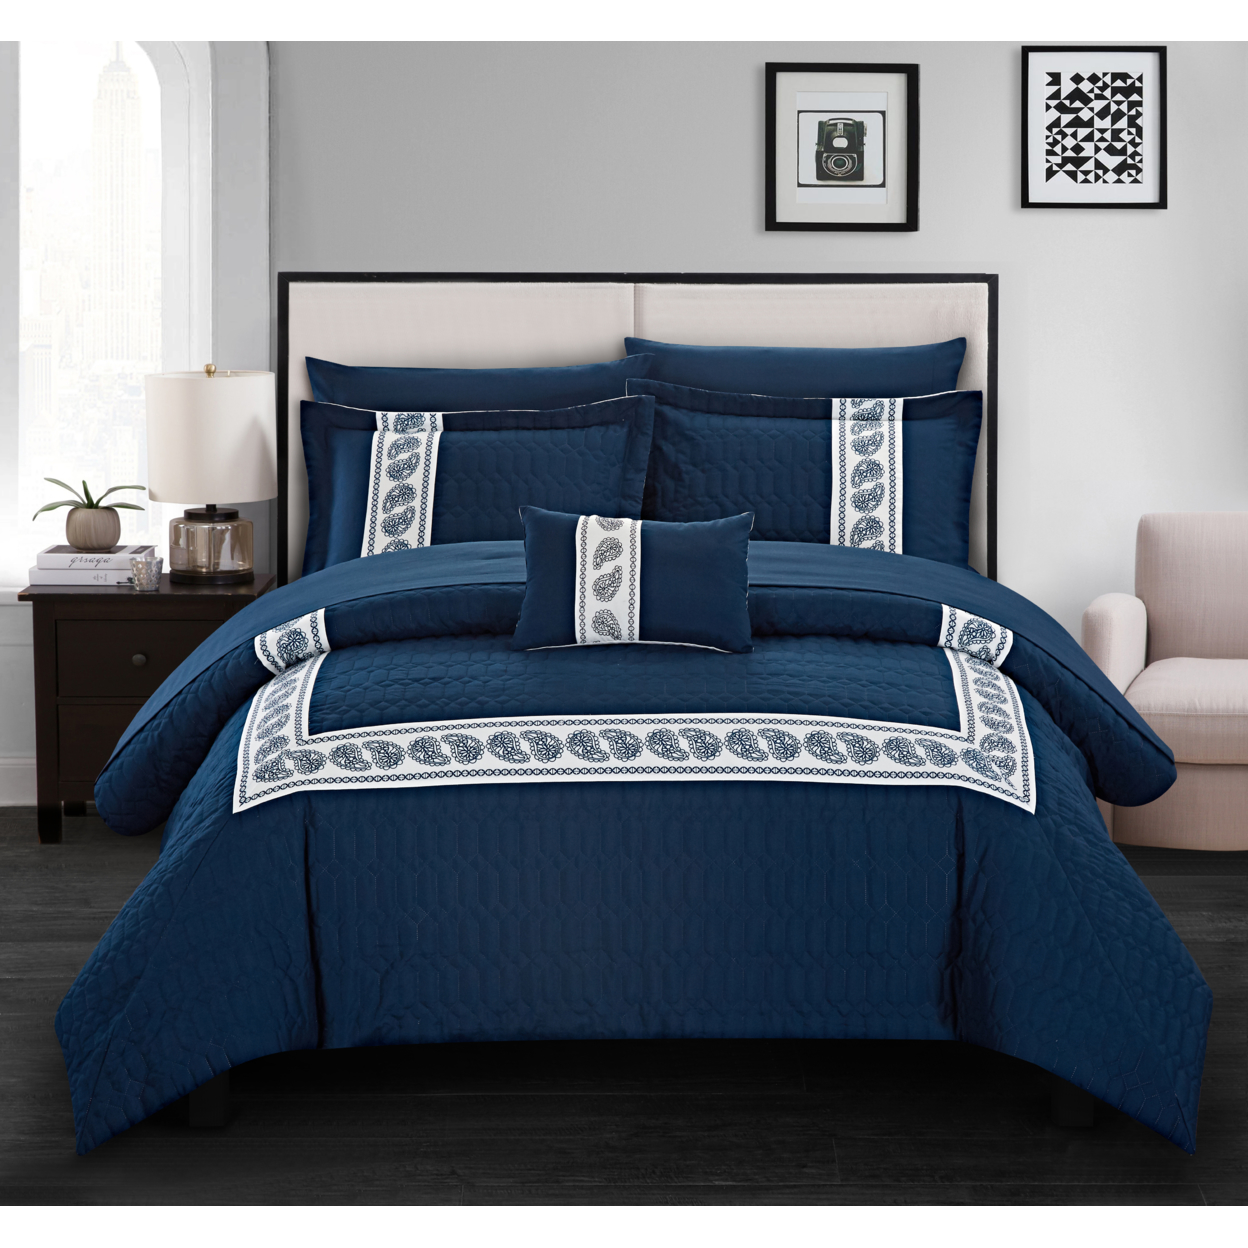 Keegan 8 Or 6 Piece Comforter Set Hotel Collection Hexagon Embossed Paisley Print Border Design Bed In A Bag - Navy, Queen